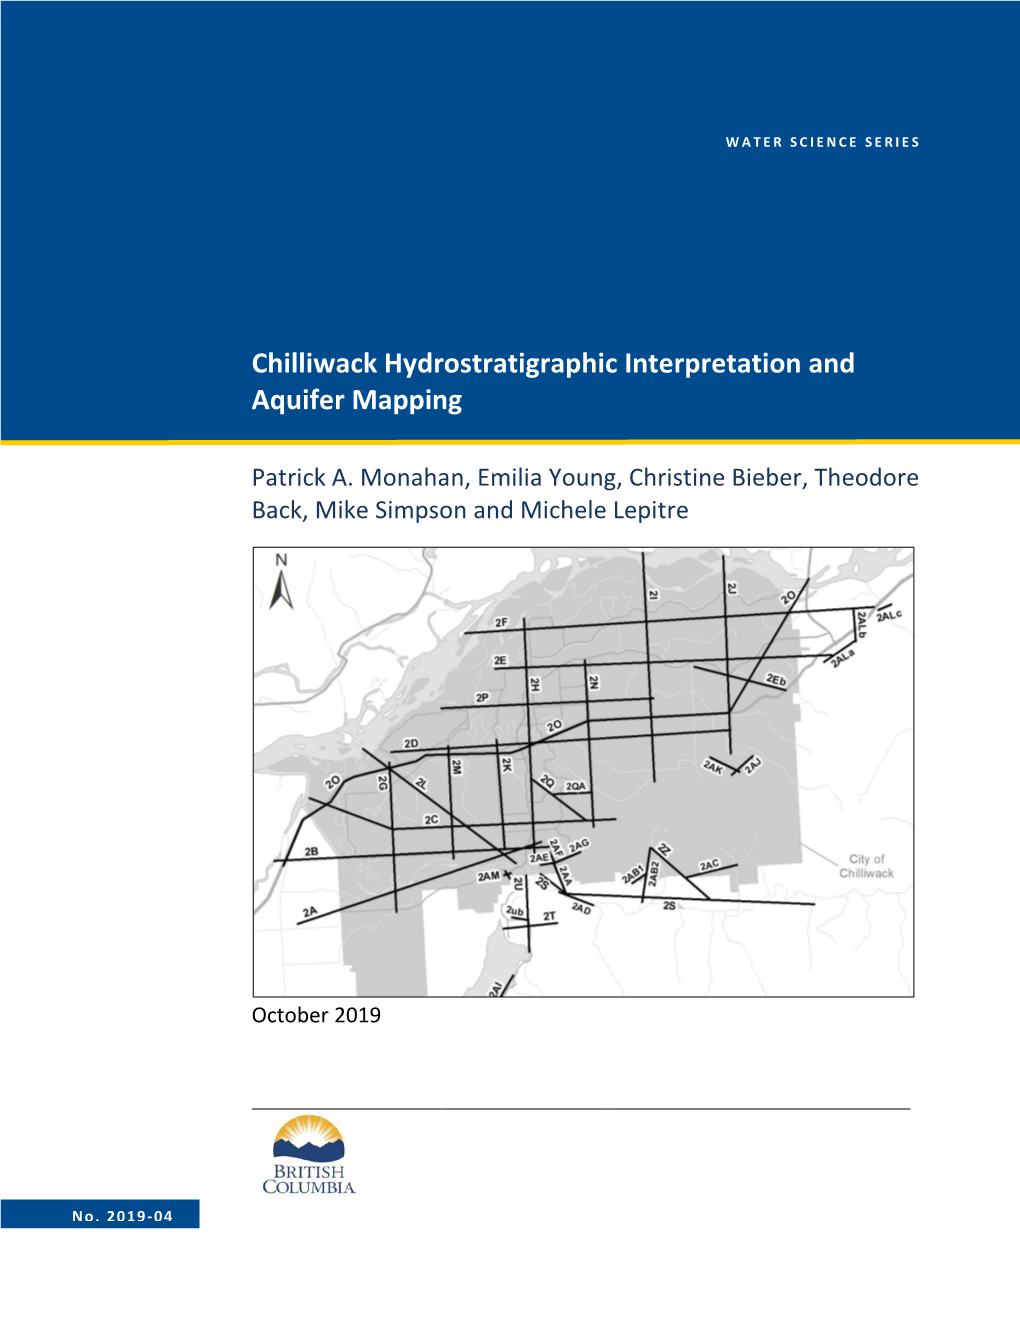 Chilliwack Hydrostratigraphic Interpretation and Aquifer Mapping